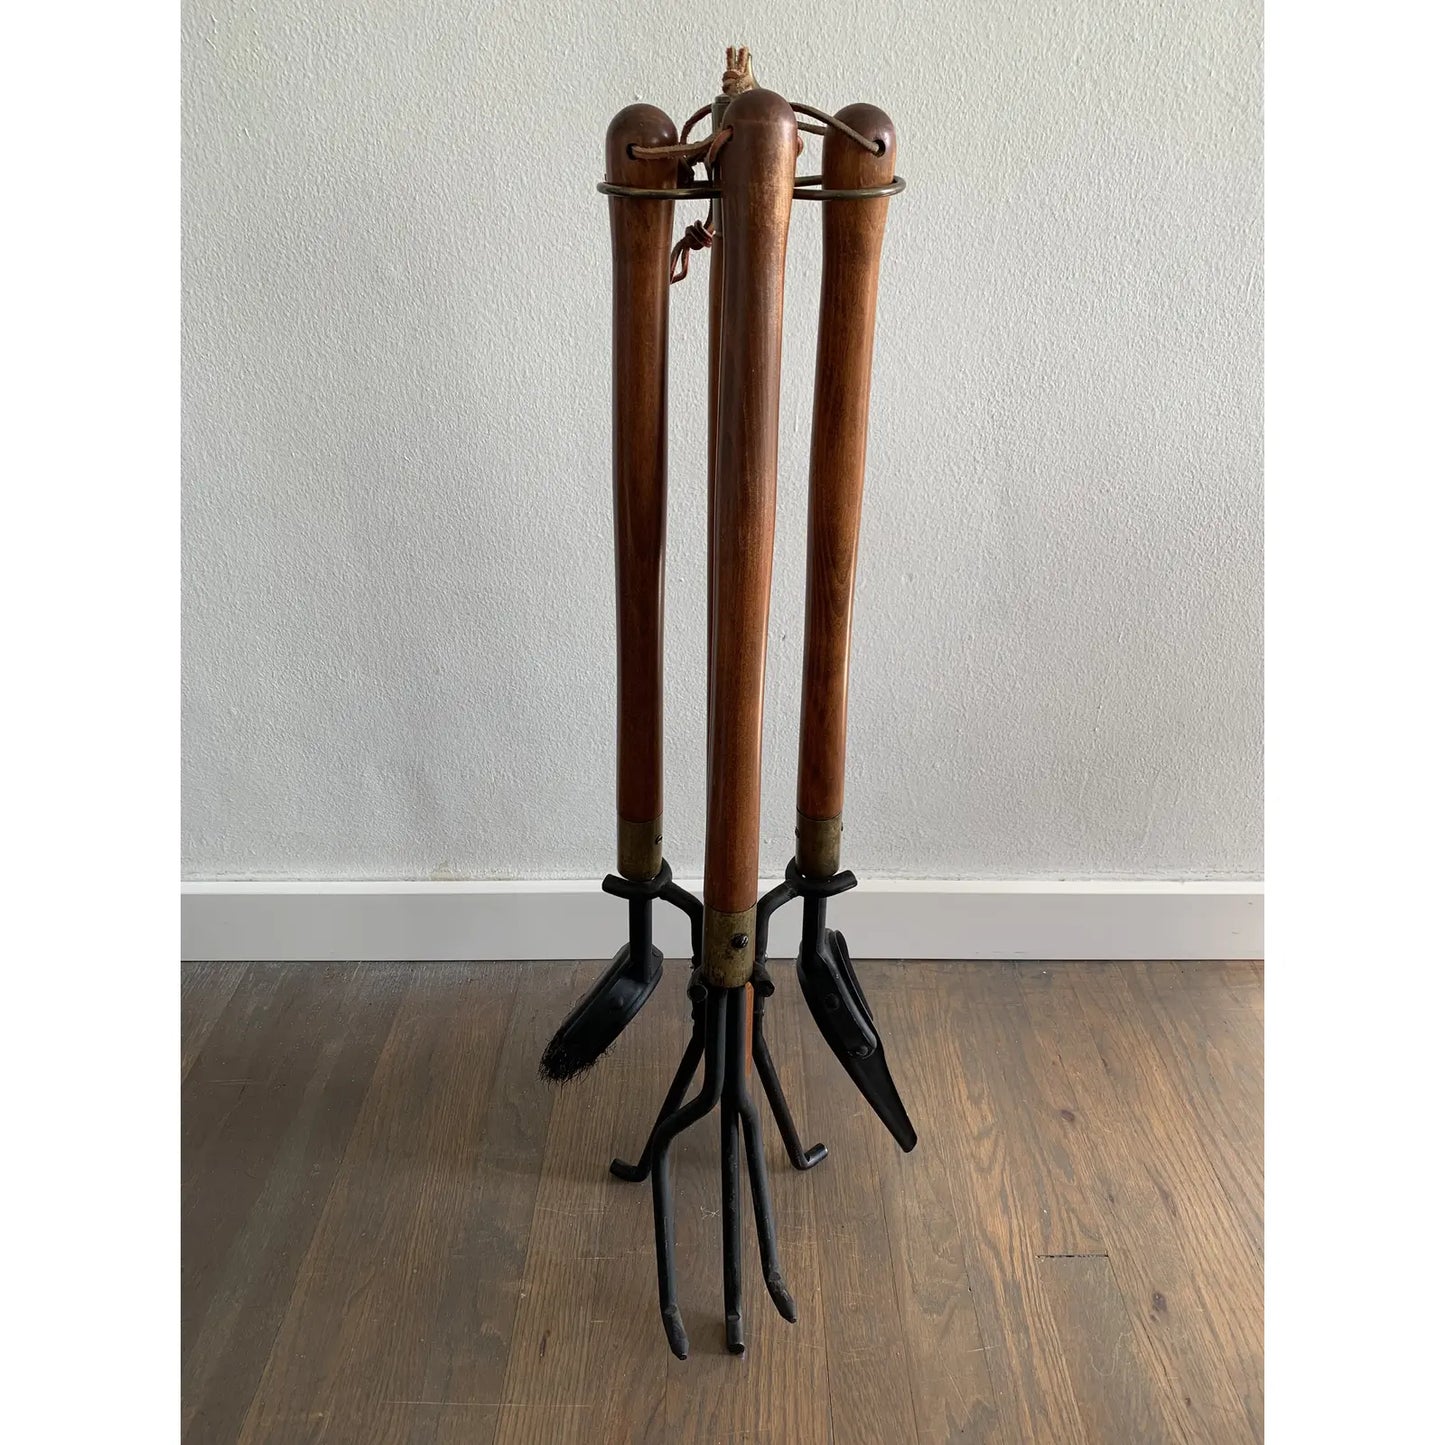 1960s Seymour Mid-Century Modern Long Teak Handle Fireplace Tool Set - 4 Pieces